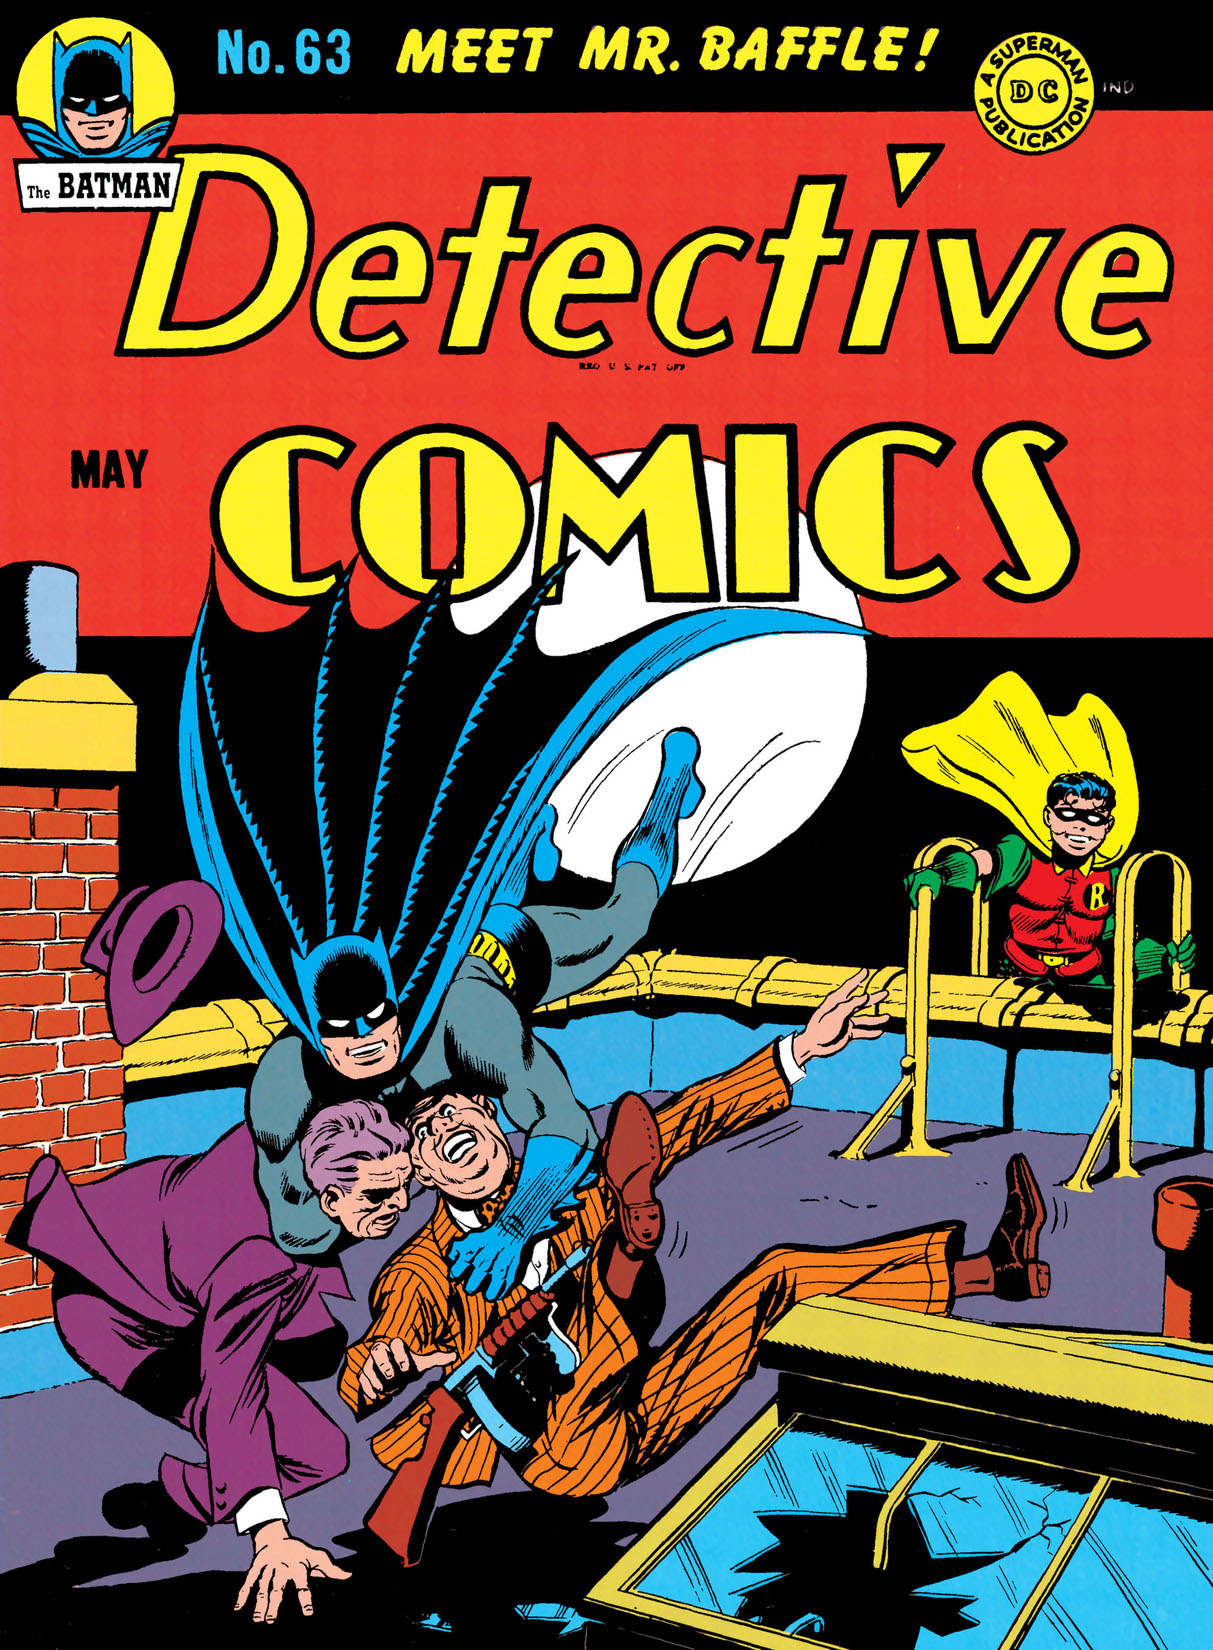 Detective Comics (1937-) #63 preview images